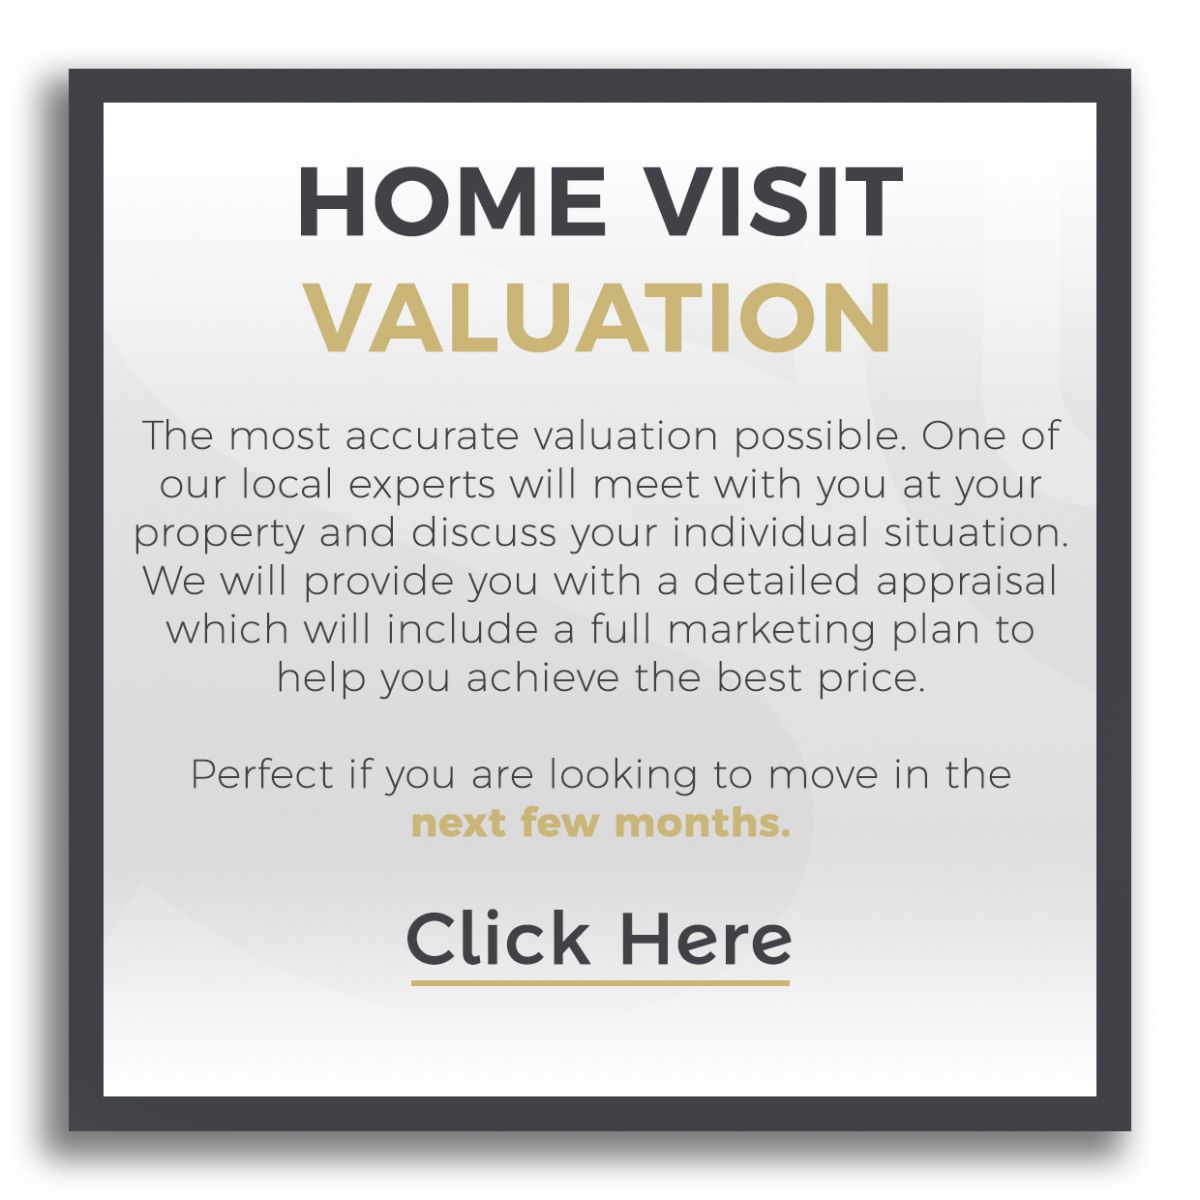 Home Visit Valuation